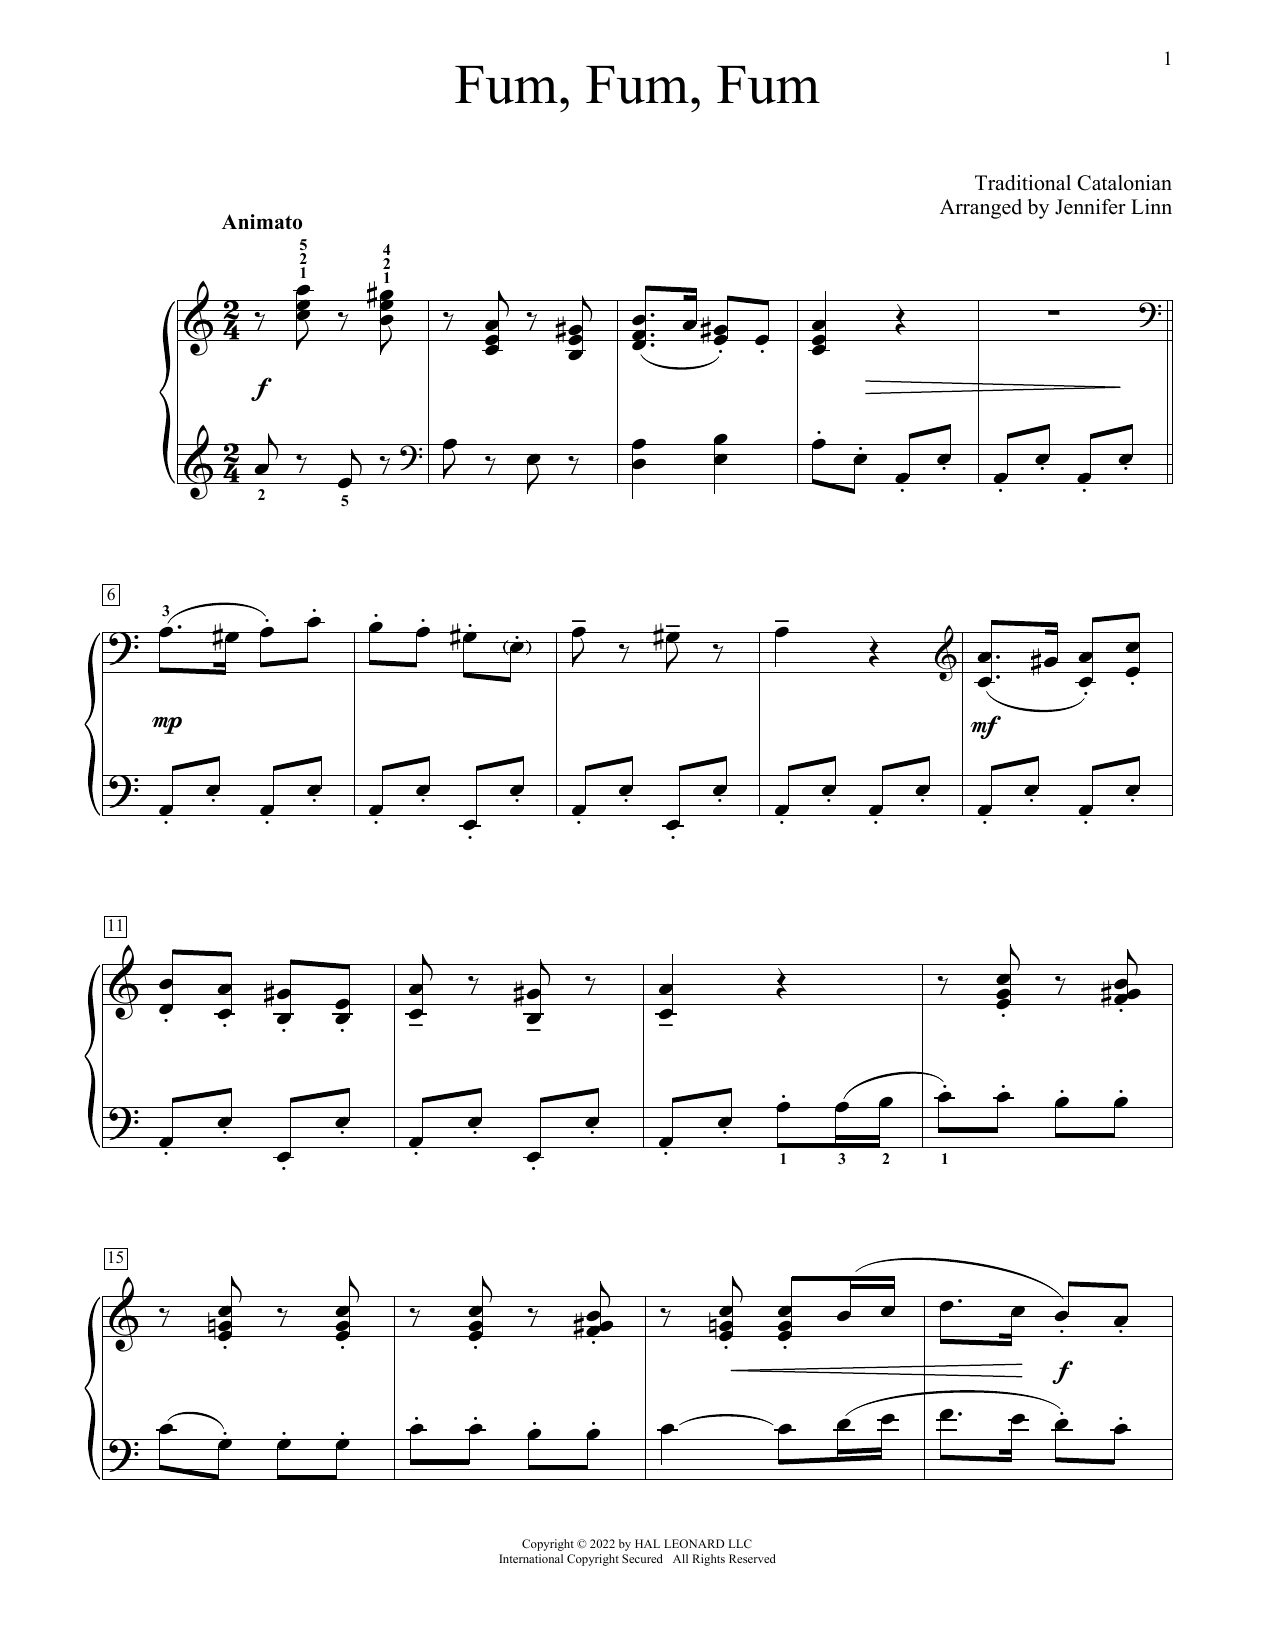 Traditional Catalonian Fum, Fum, Fum (arr. Jennifer Linn) Sheet Music Notes & Chords for Educational Piano - Download or Print PDF